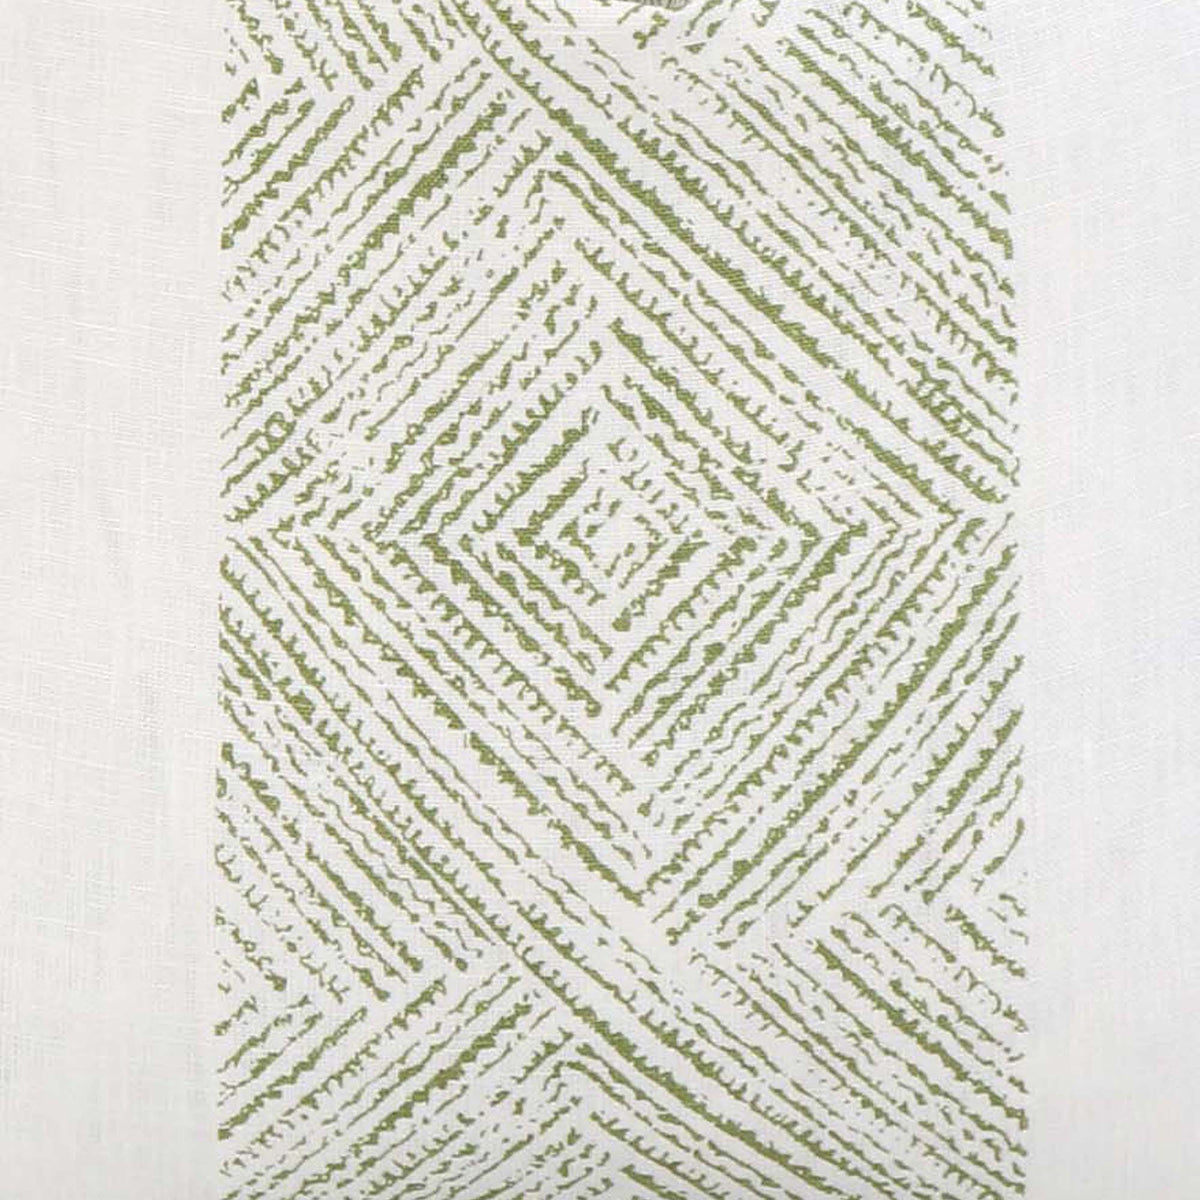 Clipperton Stripe Green / 4x4 inch Fabric Swatch